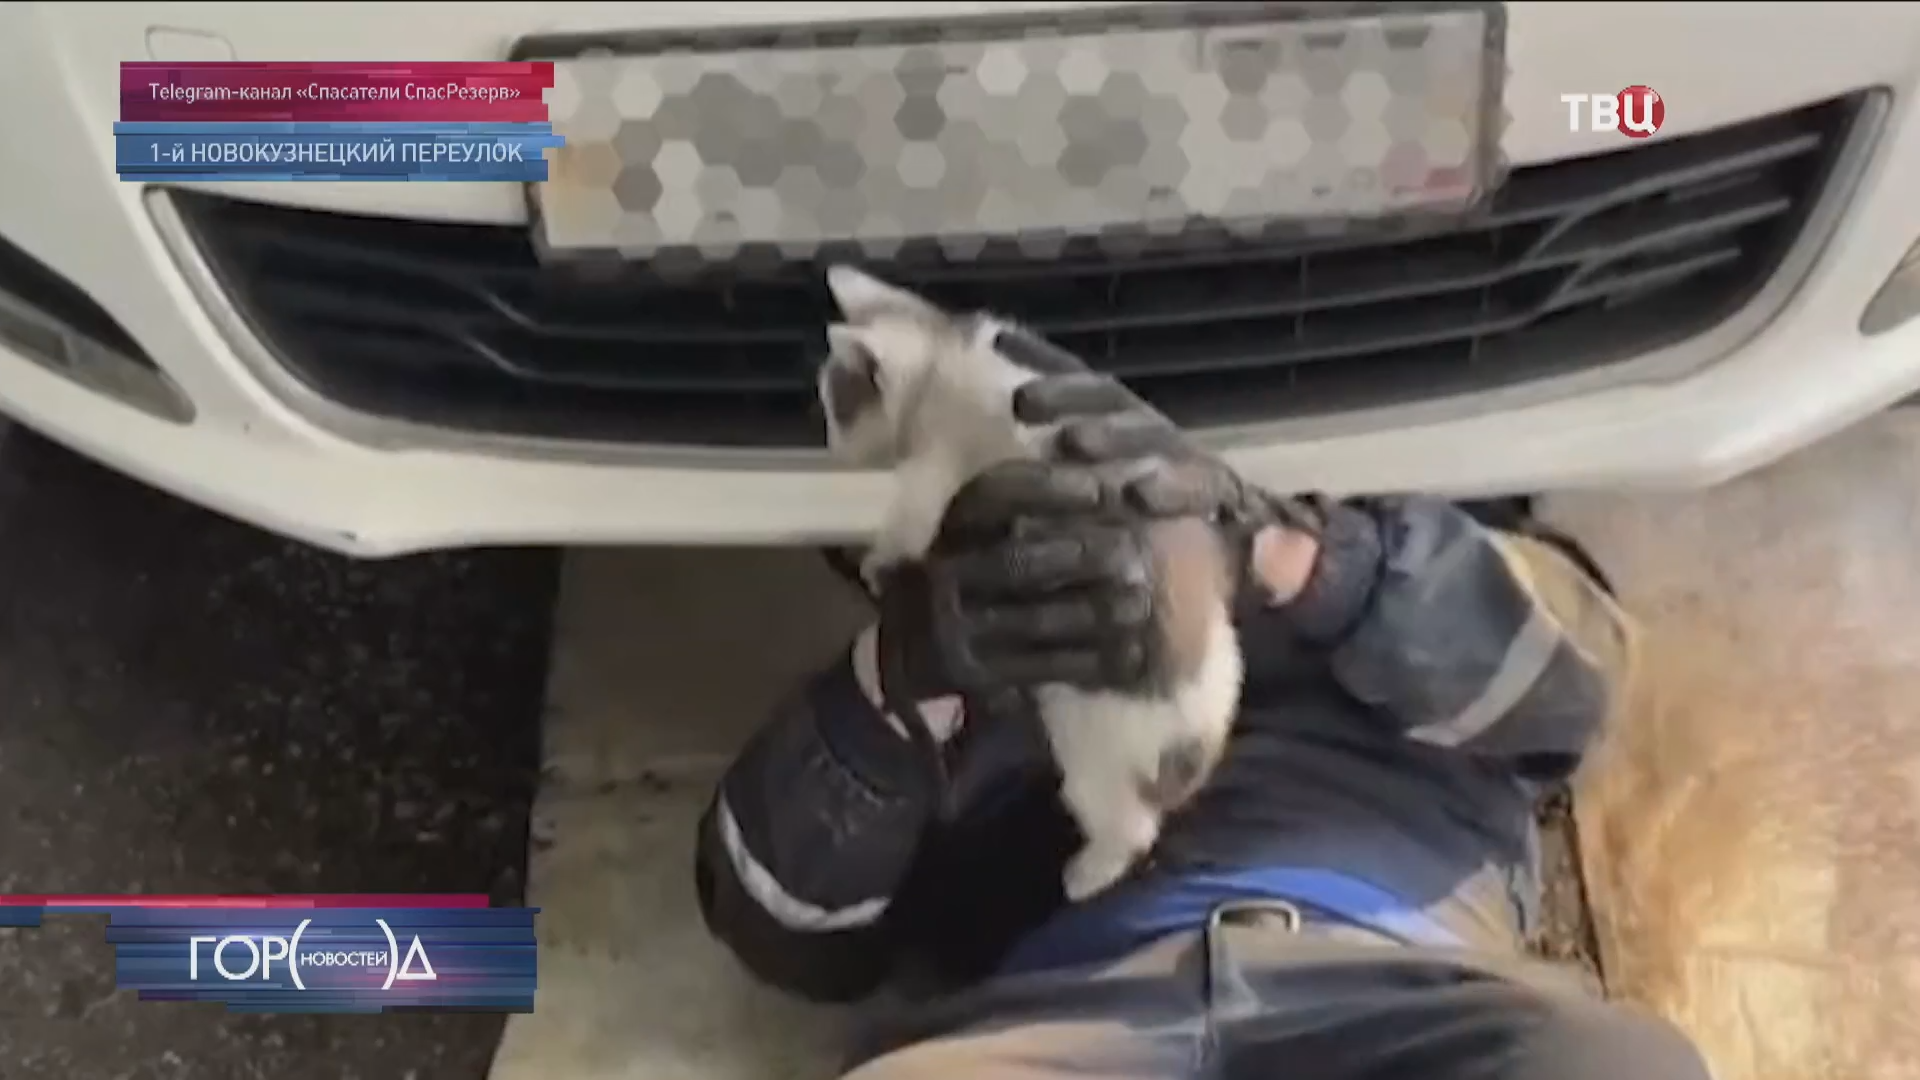 Сотрудники "СпасРезерва" вытащили котенка из-под капота иномарки / Город новостей на ТВЦ